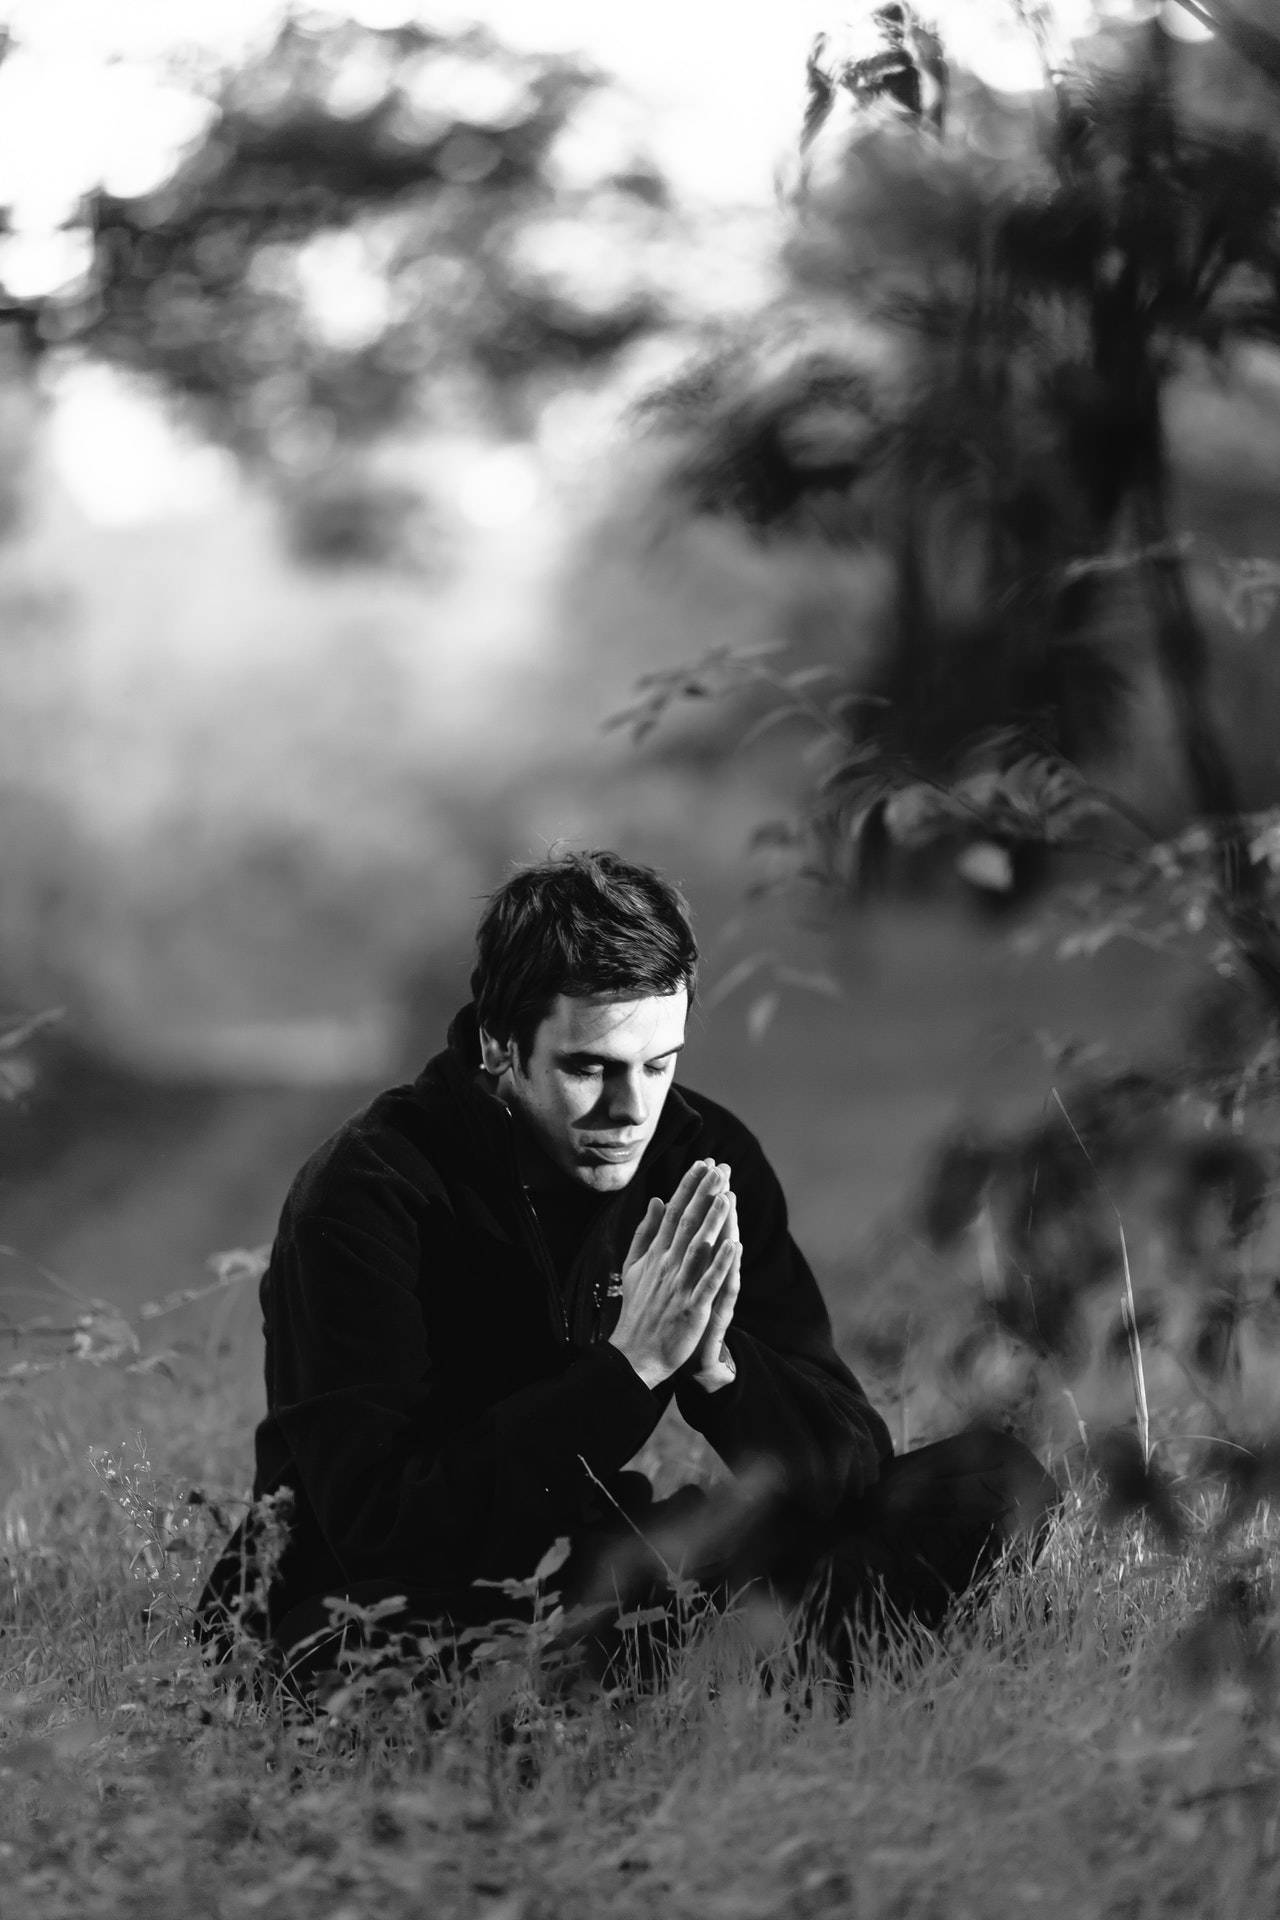 Man sitting on a grass field praying